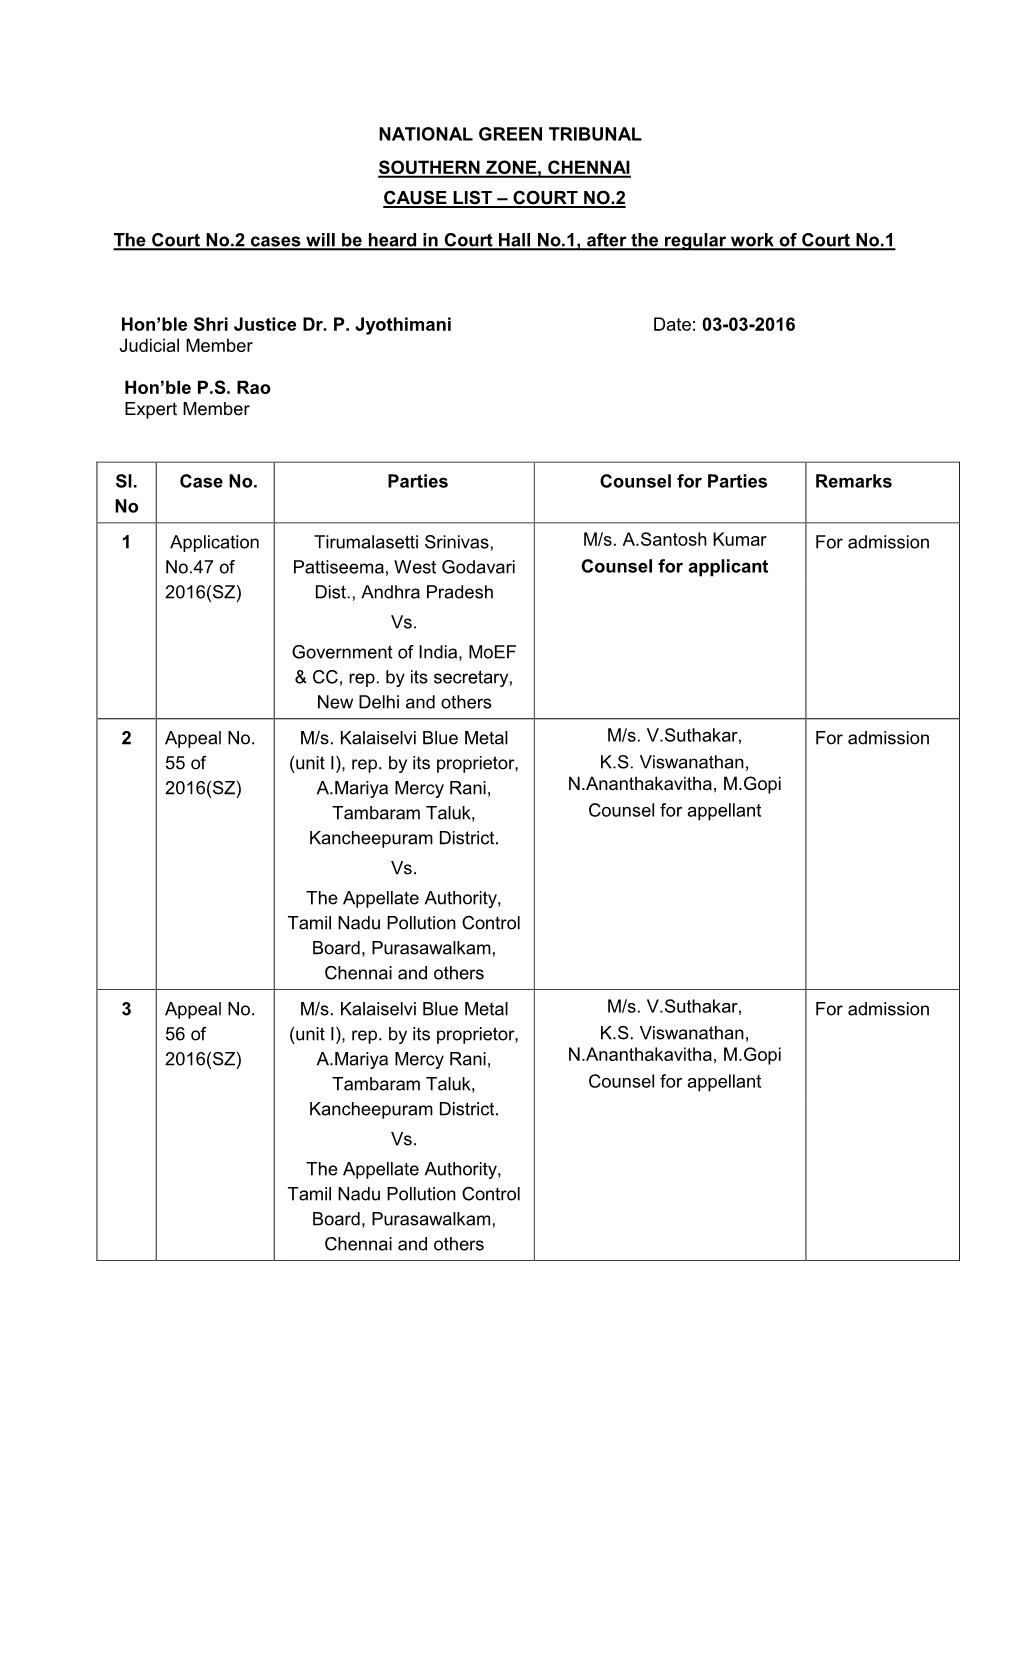 National Green Tribunal Southern Zone, Chennai Cause List – Court No.2